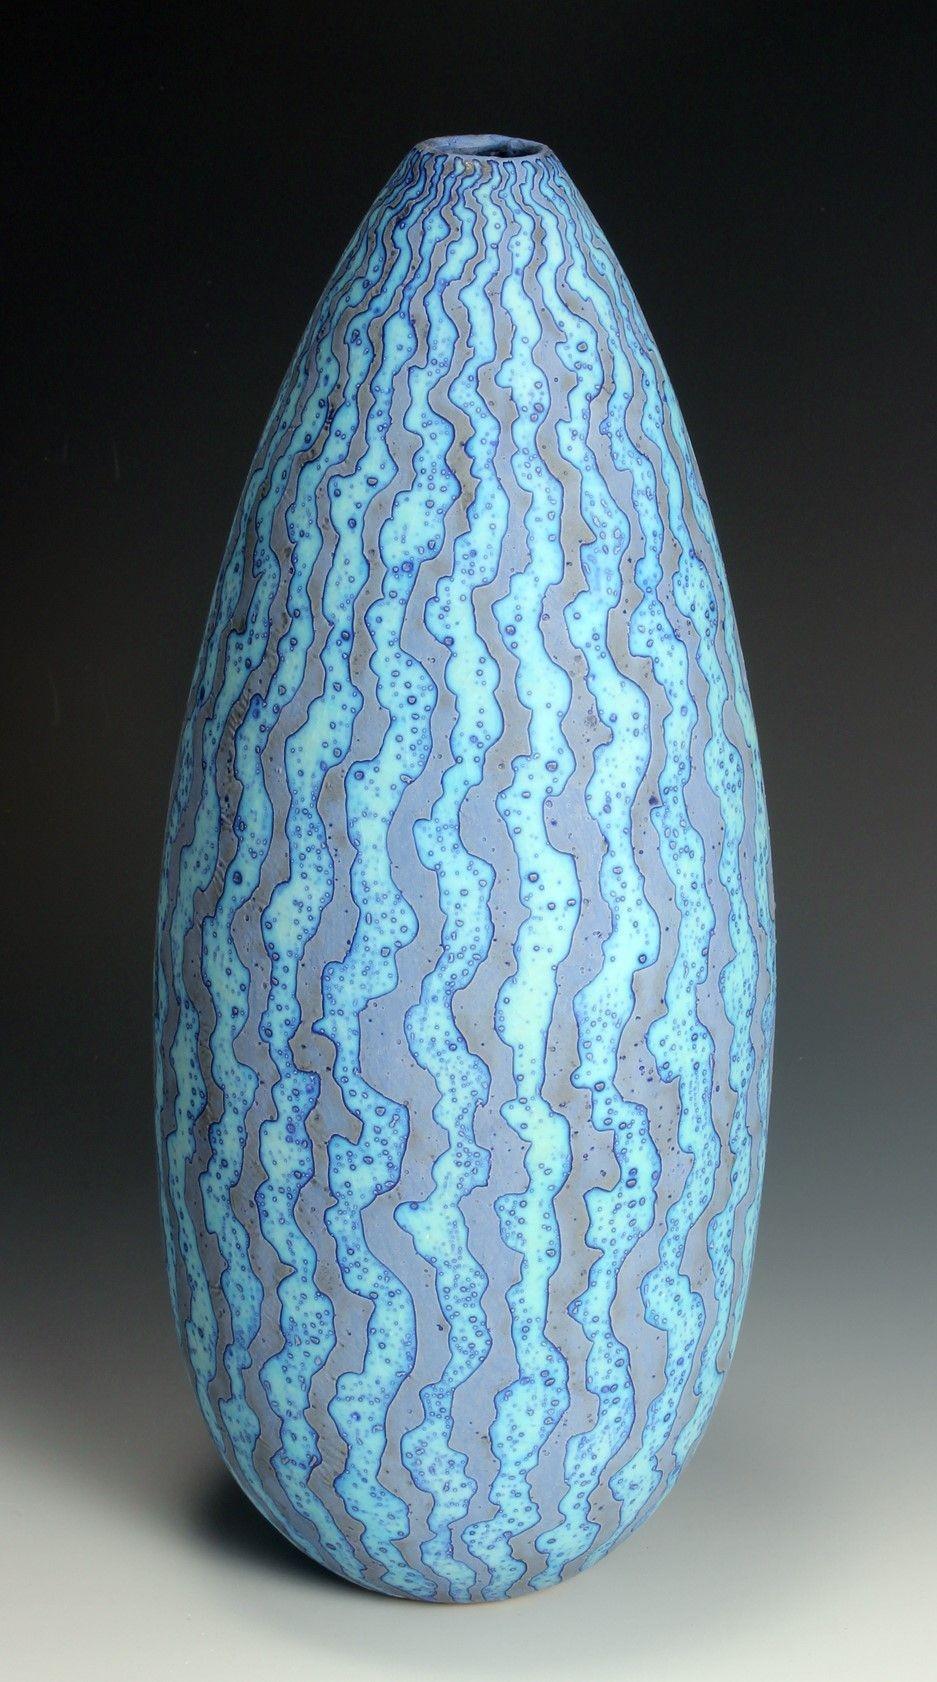 Peter beard
Conical Vase in a Wax Resist Glaze
35cm high, 14cm wide
2023
